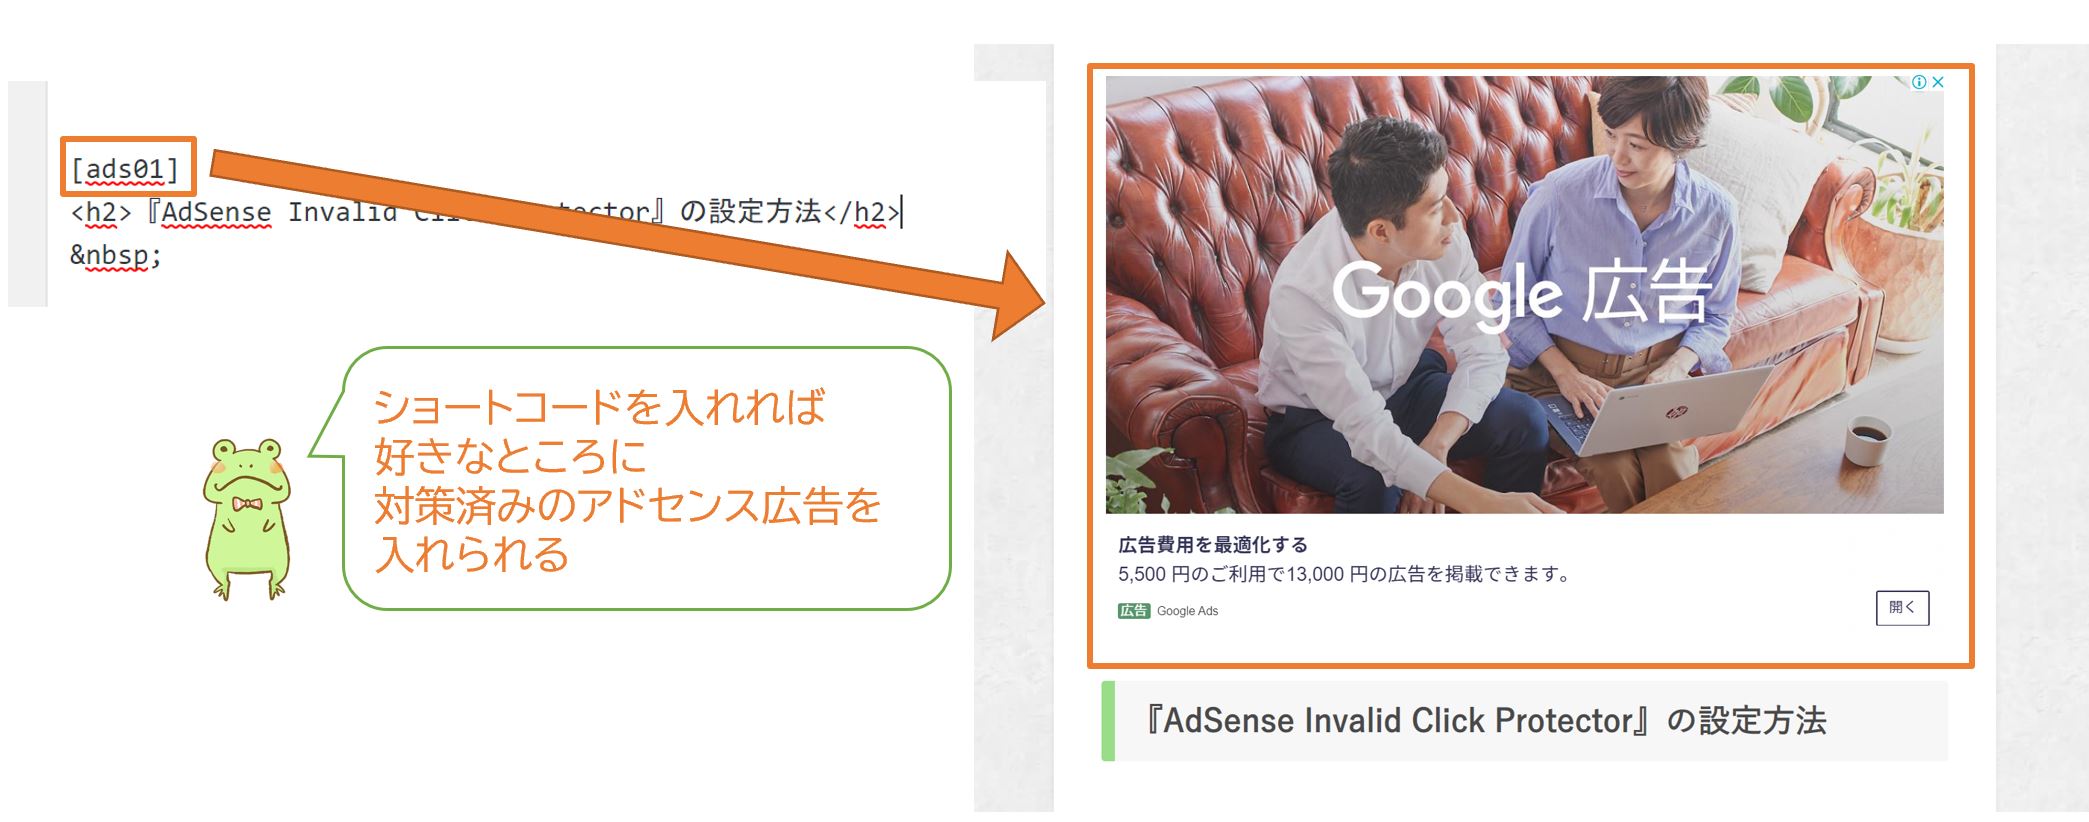 AdSense-Invalid-Click-Protector-を使った広告表示